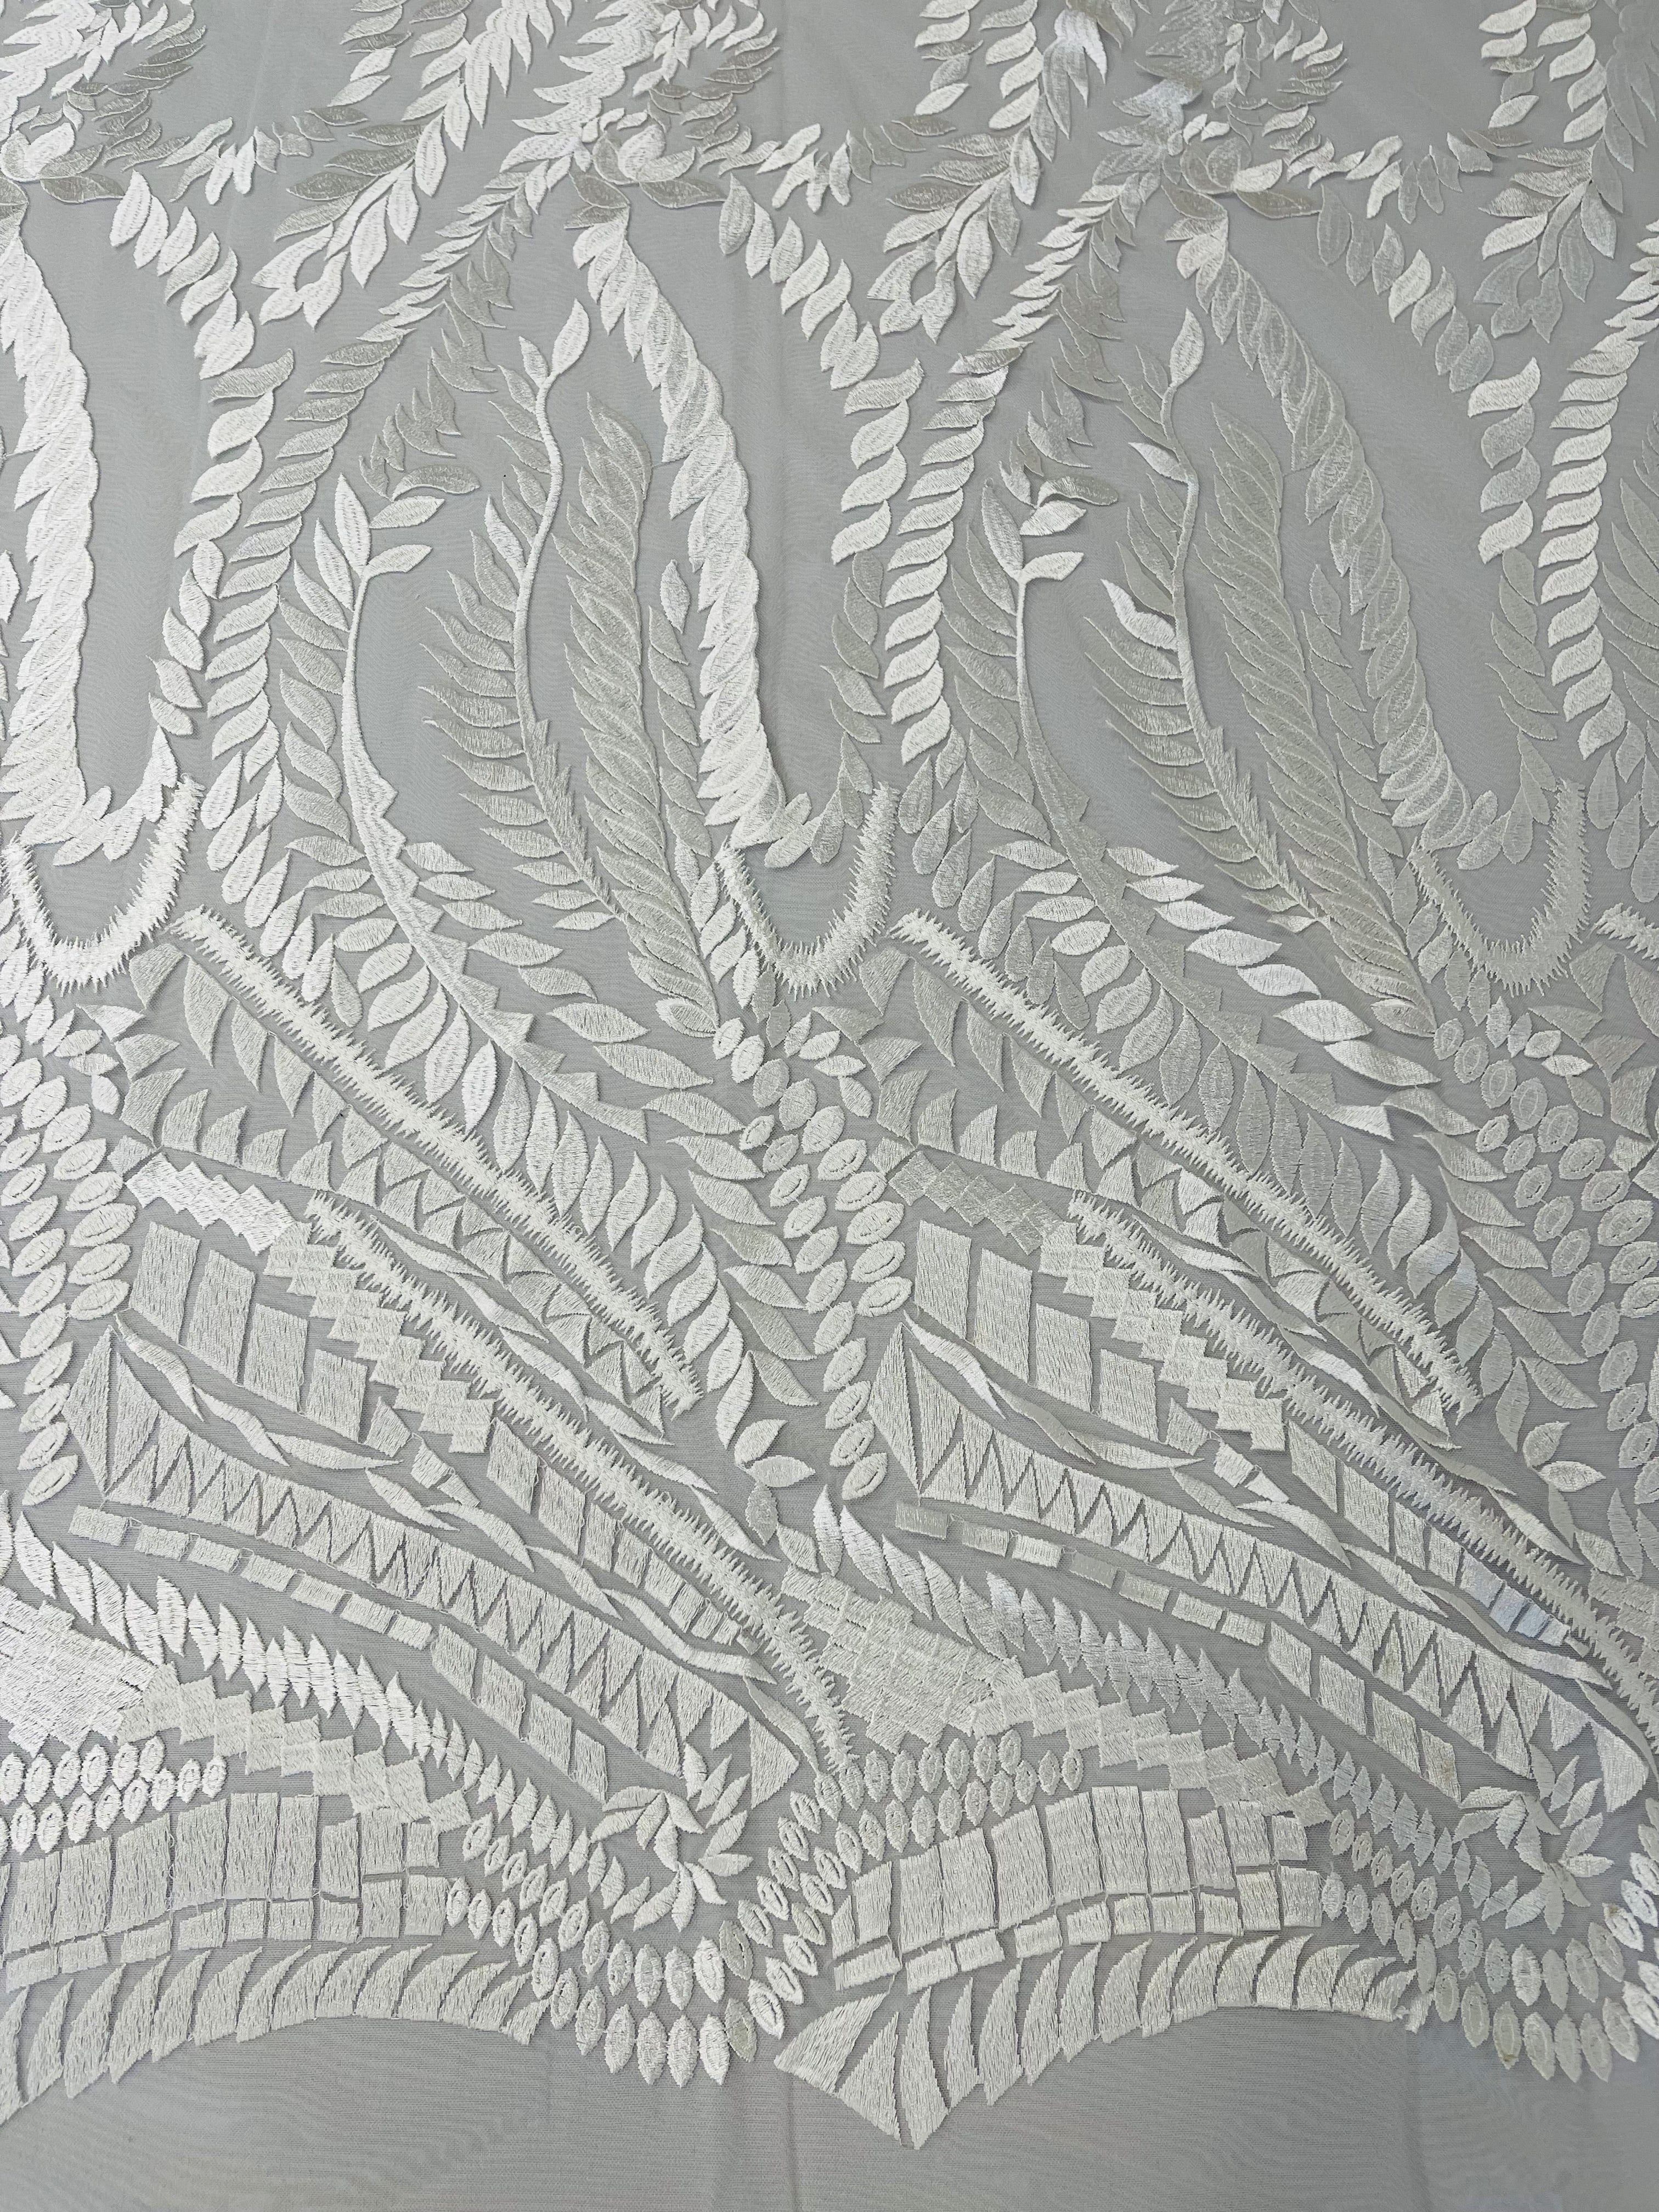 Long Leaf Designs Lace Fabric - Hunter Green - Embroidered Braid Leaf